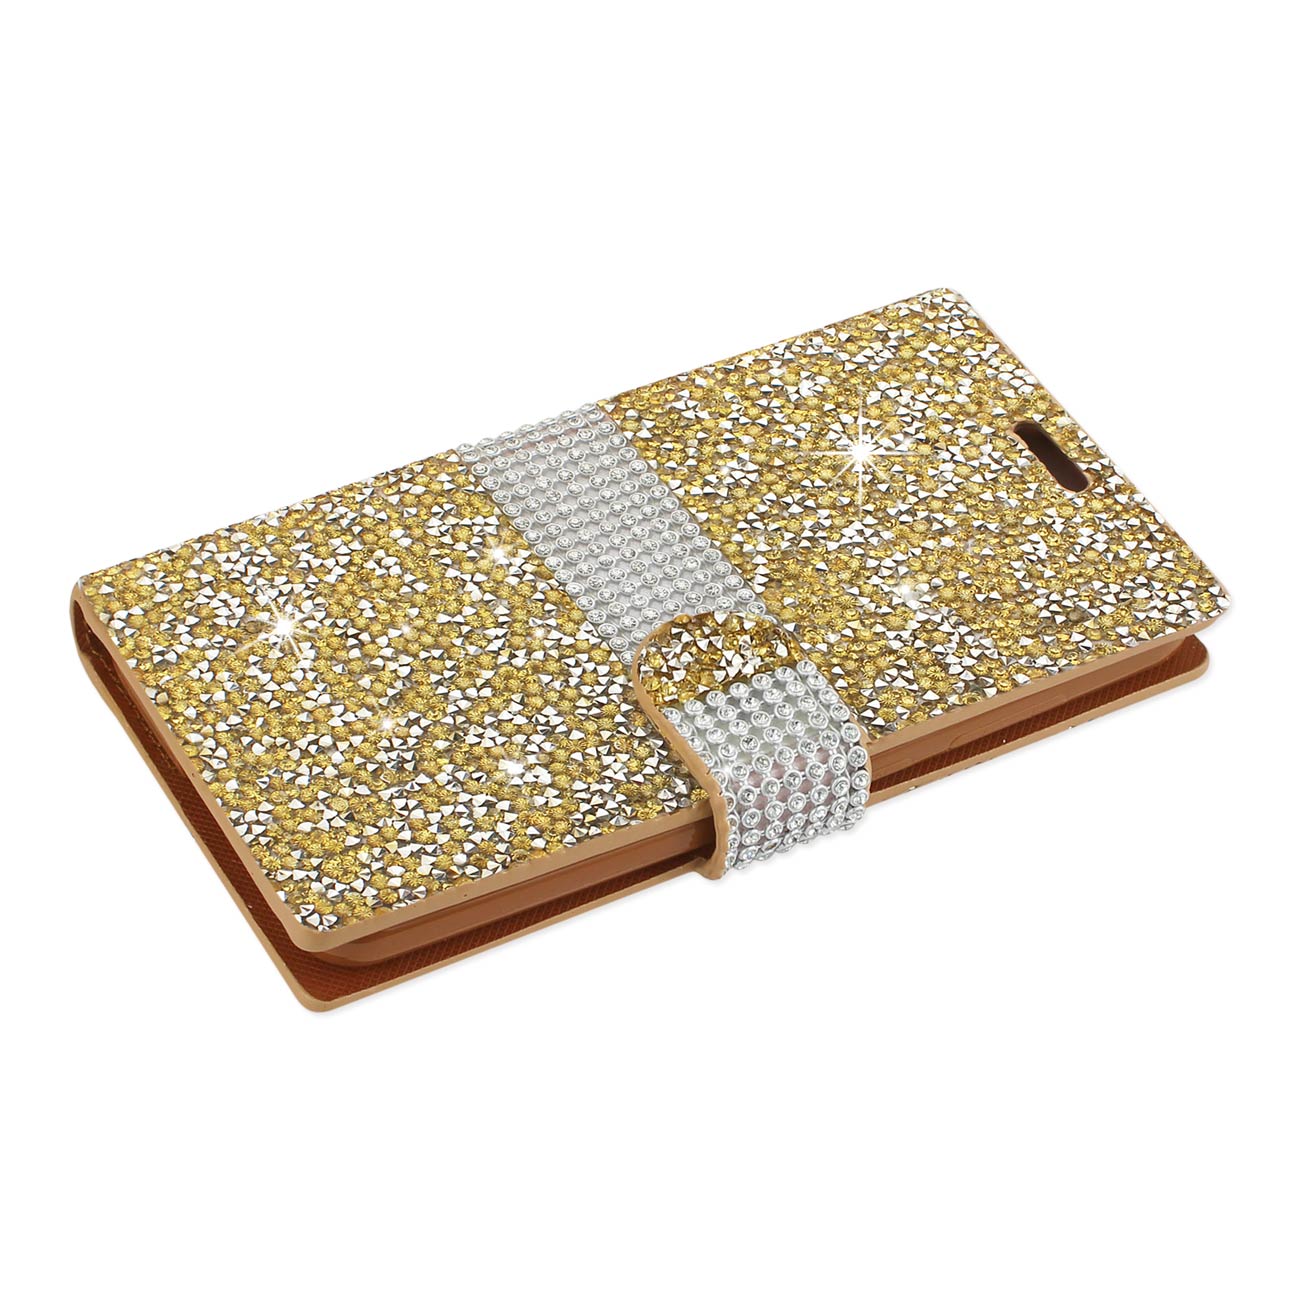 Wallet Case Diamond Rhinestone LG G6 Gold Color